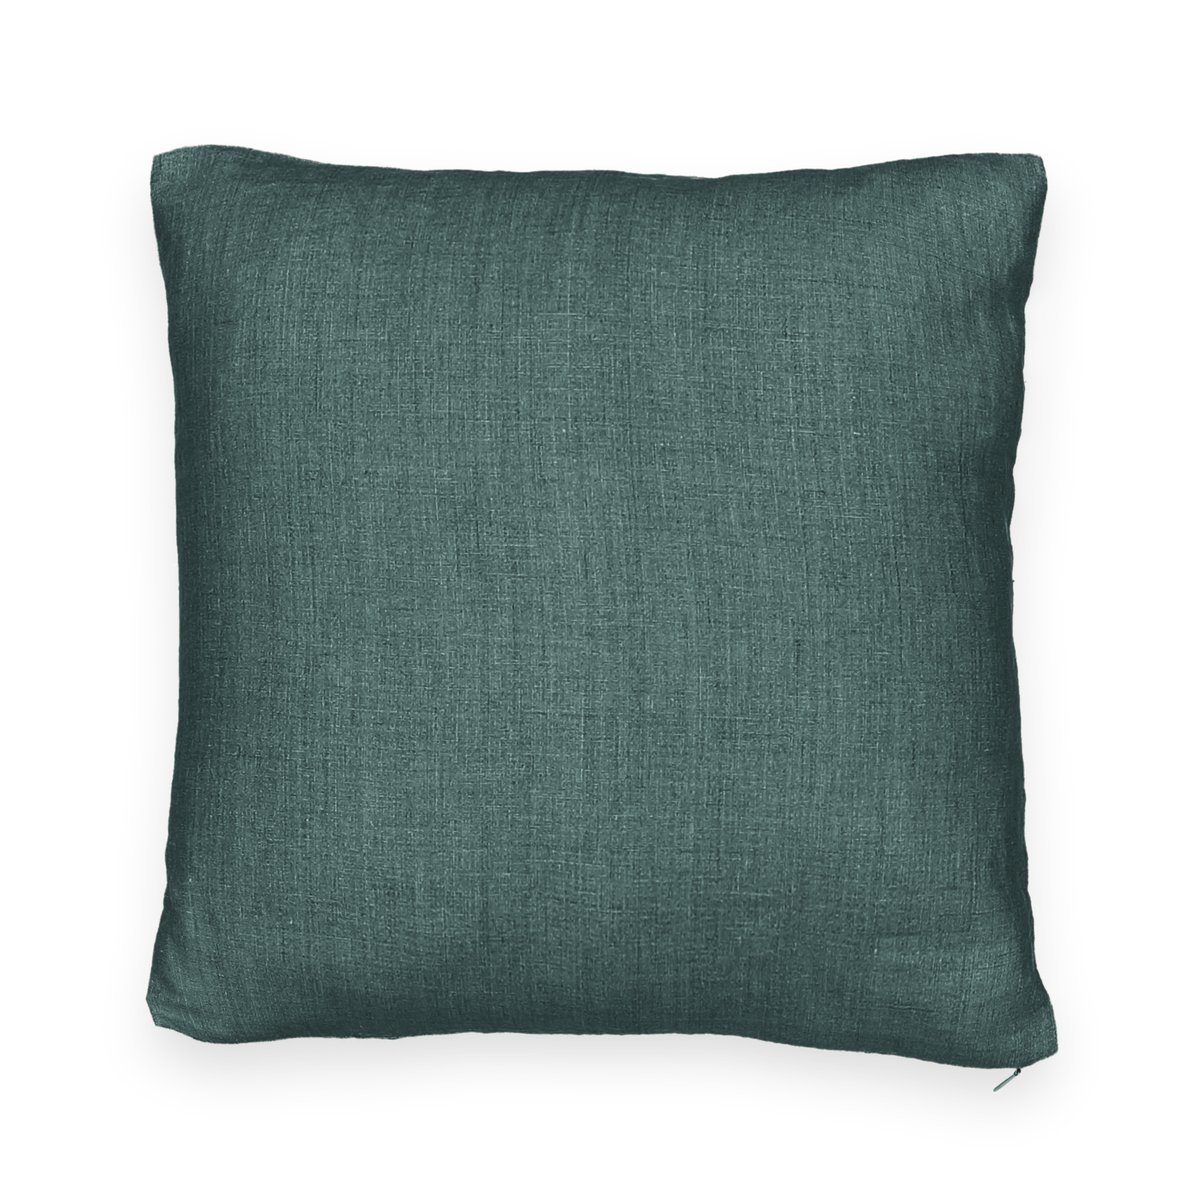 Чехол LaRedoute На подушку-валик из стираного льна ONEGA 50 x 30 см зеленый, размер 50 x 30 см